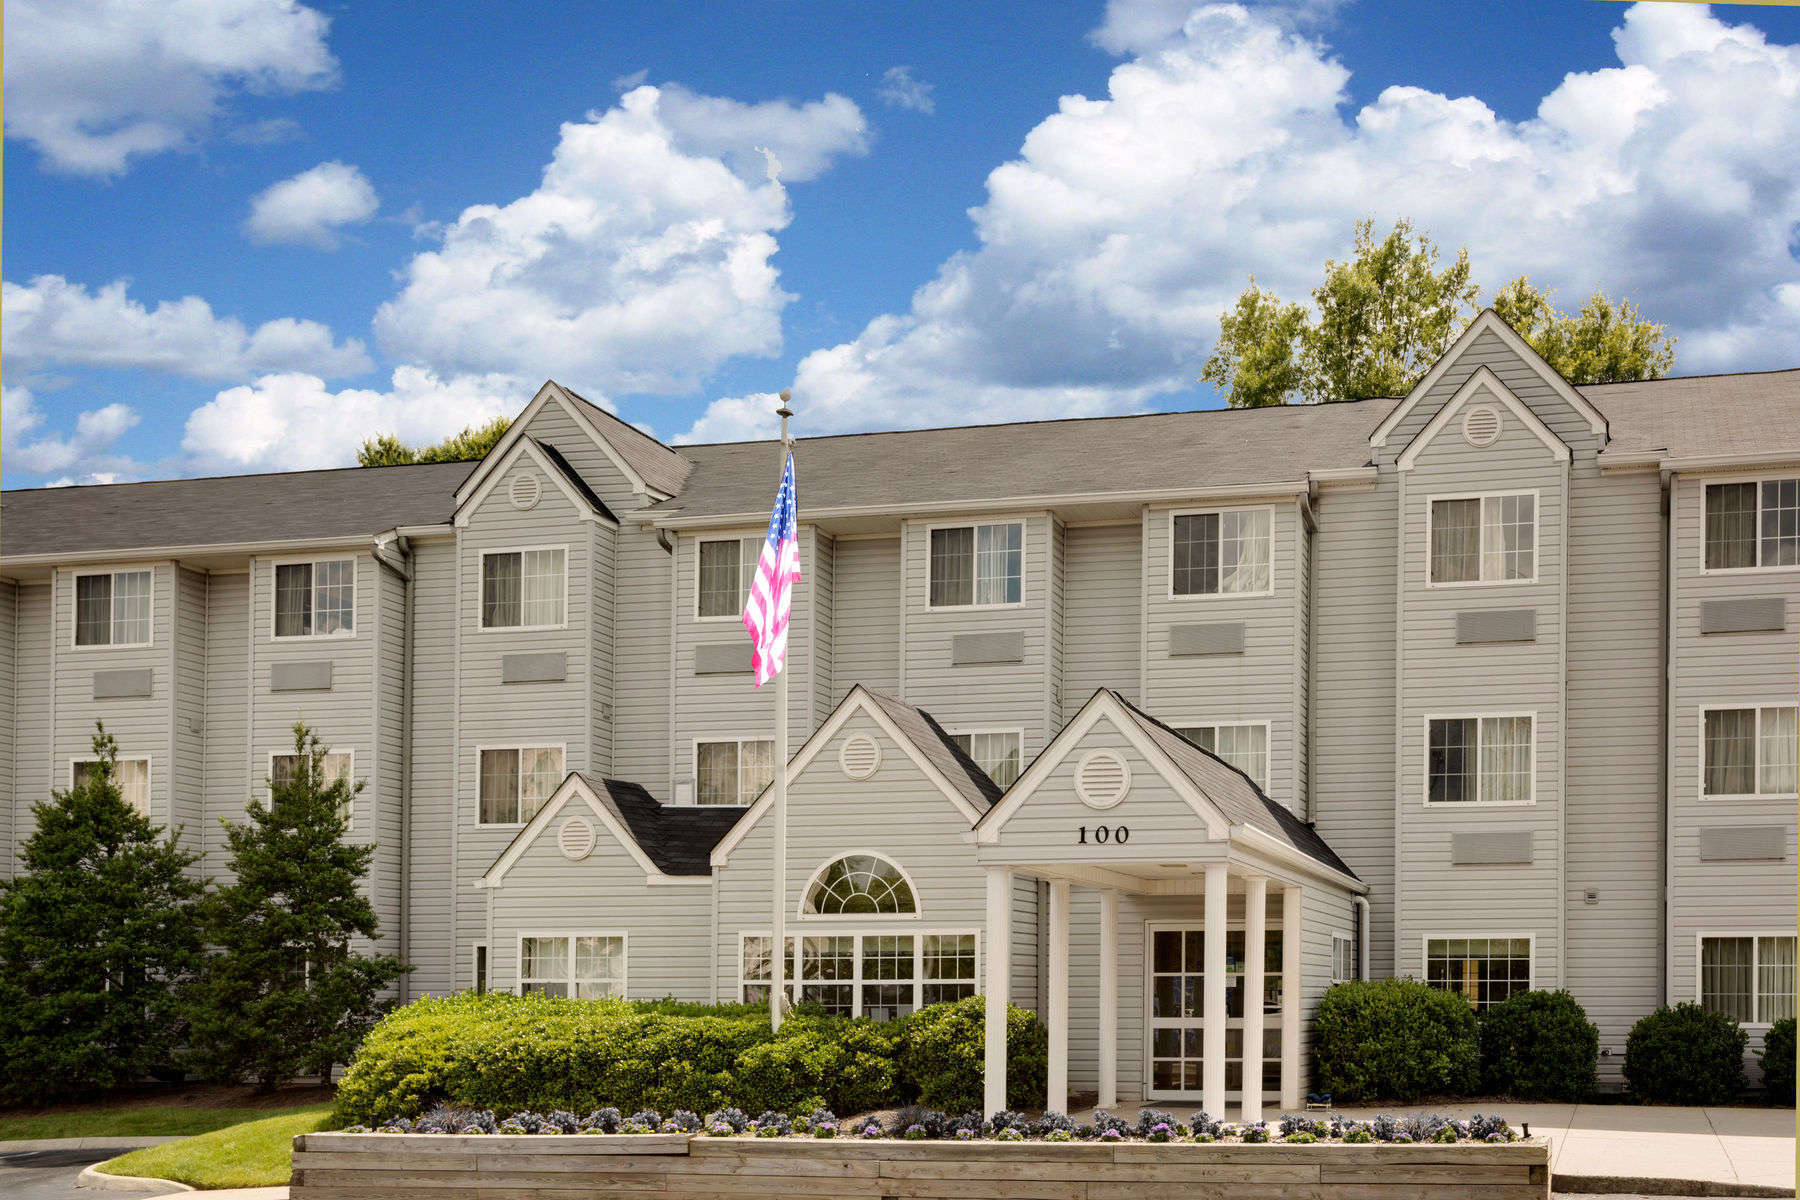 Photo of Microtel Inn & Suites by Wyndham Winston Salem, Winston Salem, NC